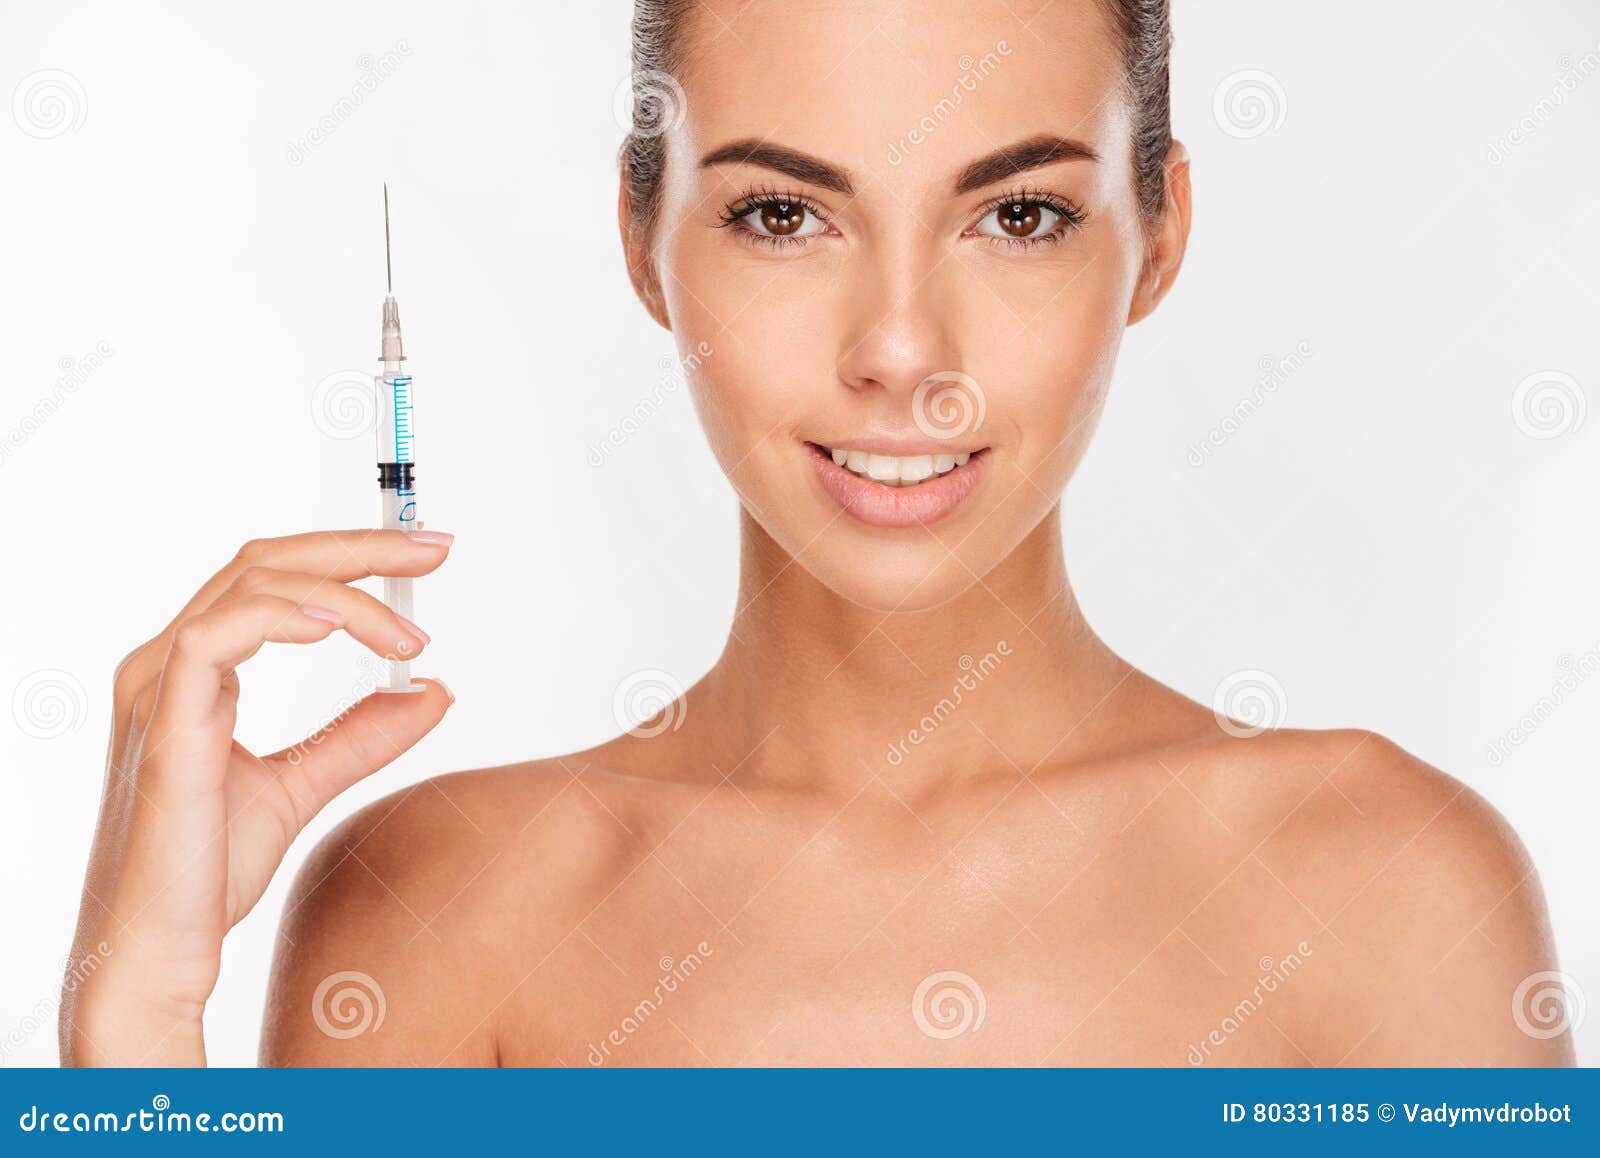 beautiful woman preparing for botox injection